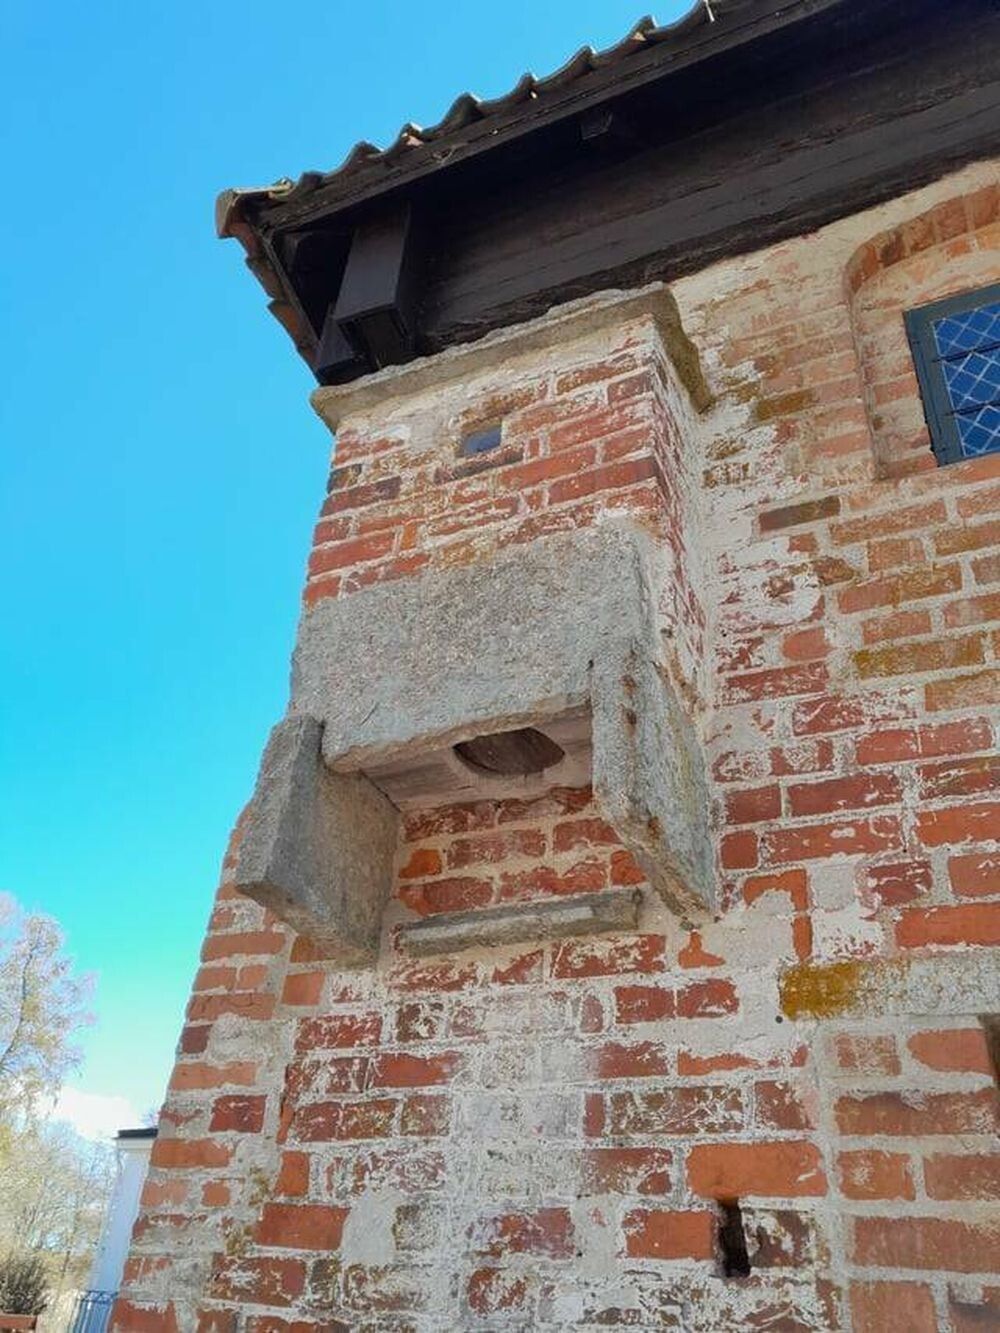 24. Туалет начала 16 века в Вадстене, Швеция